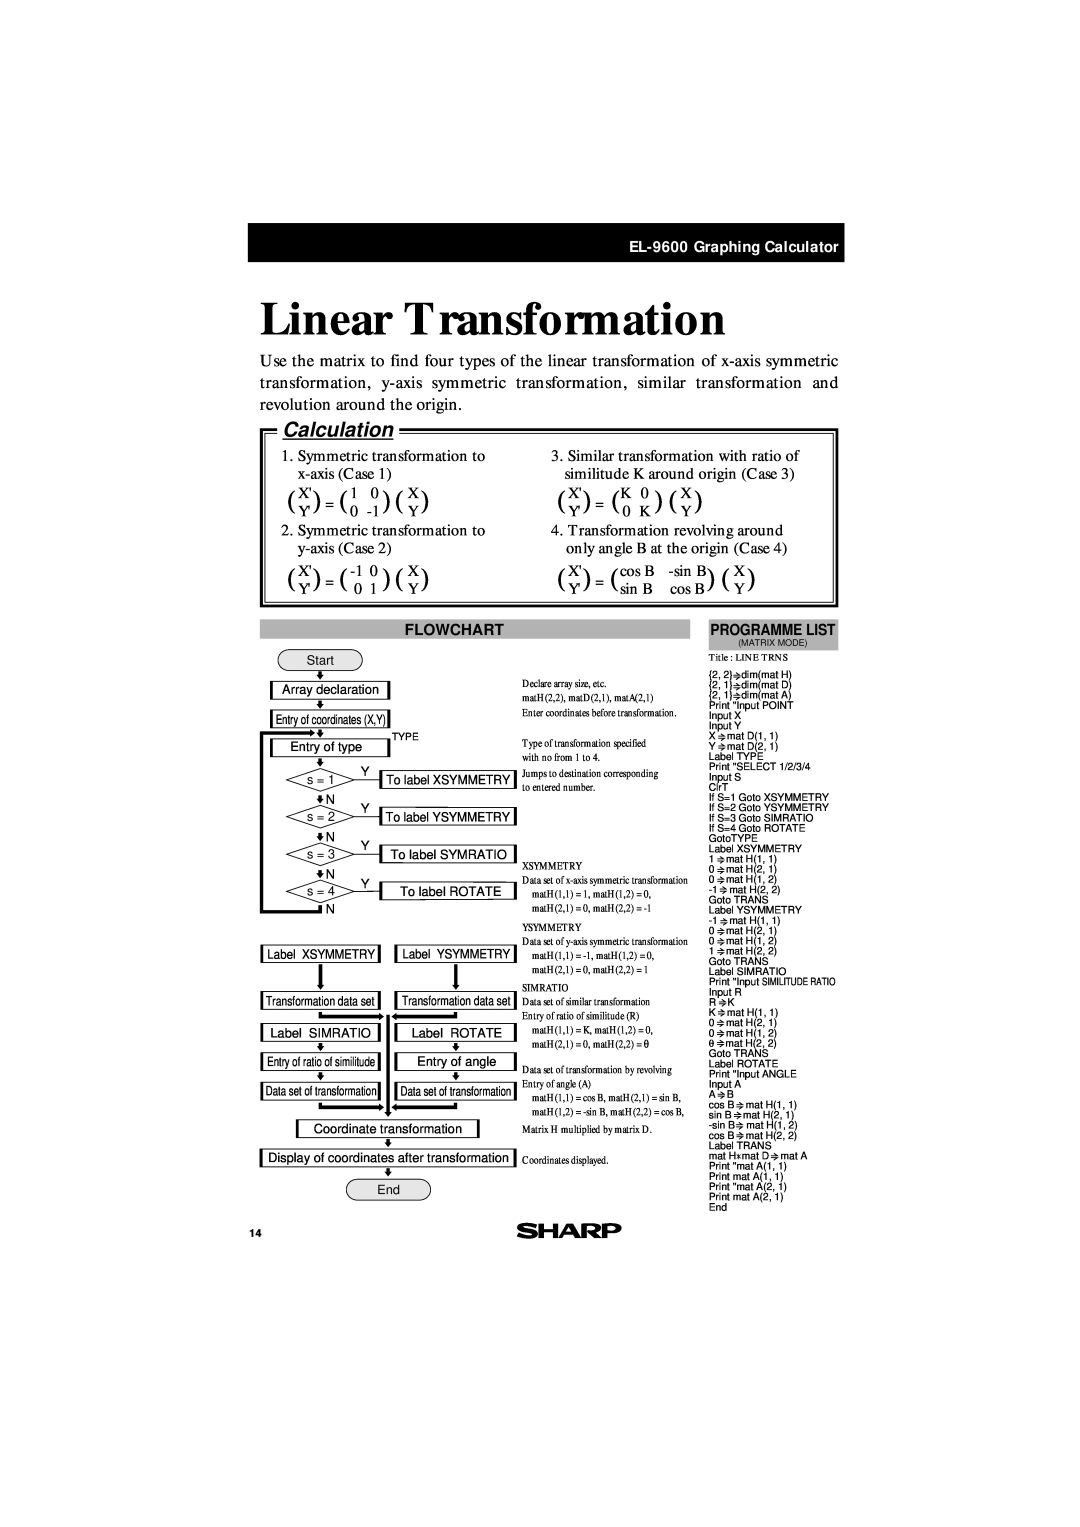 Sharp EL-9600 Linear Transformation, Symmetric transformation to x-axis Case XY = 10 -01 XY, cos B, Y = sin B, Calculation 